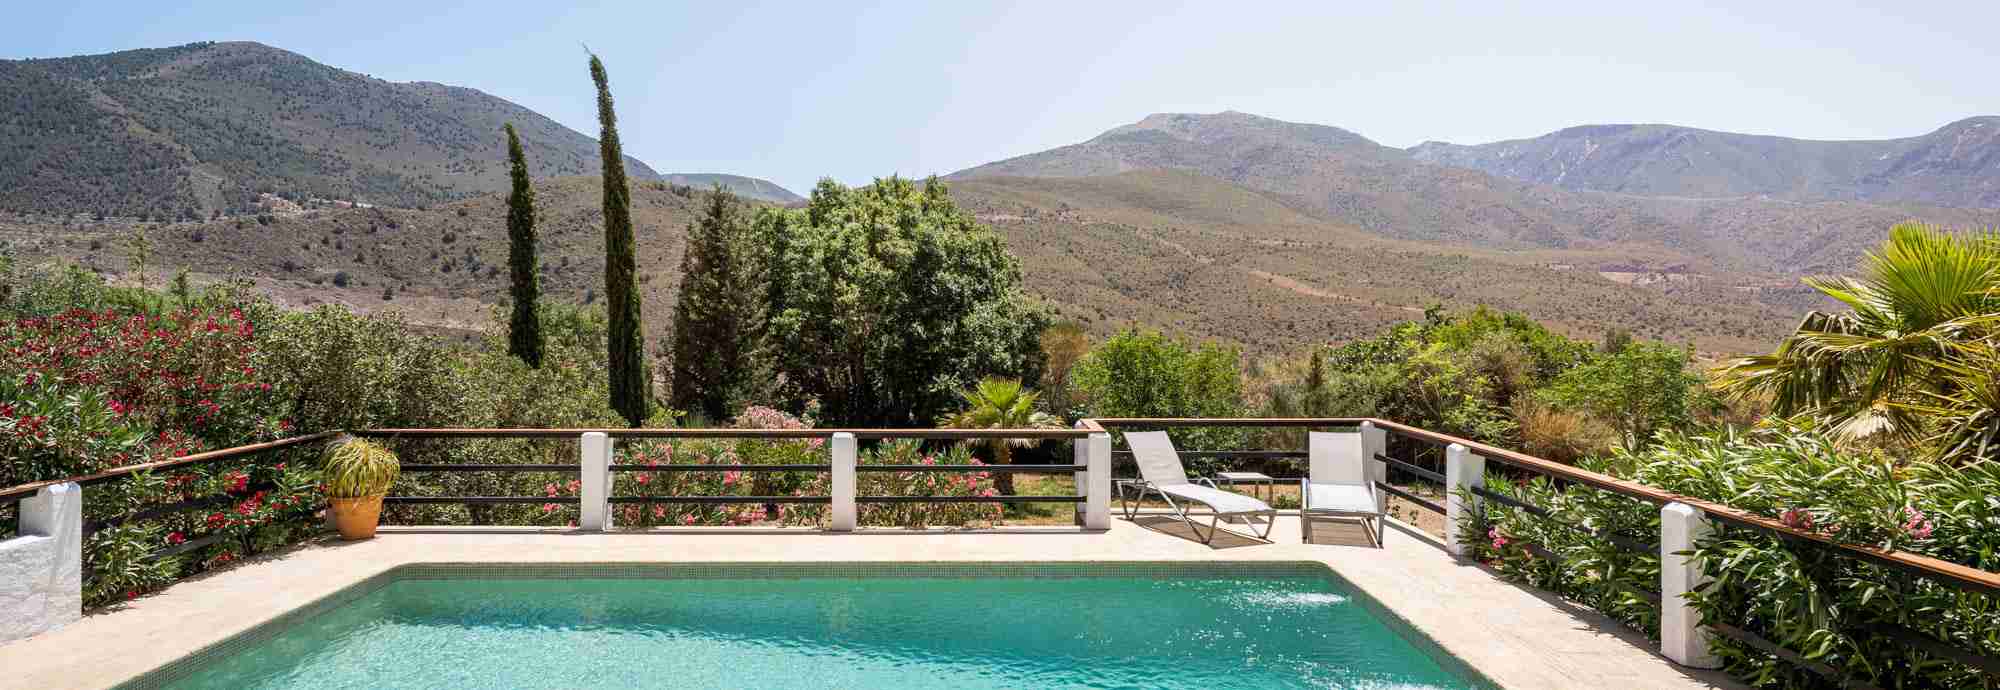 Private, attractive Alpujarra villa with pool, gardens and views